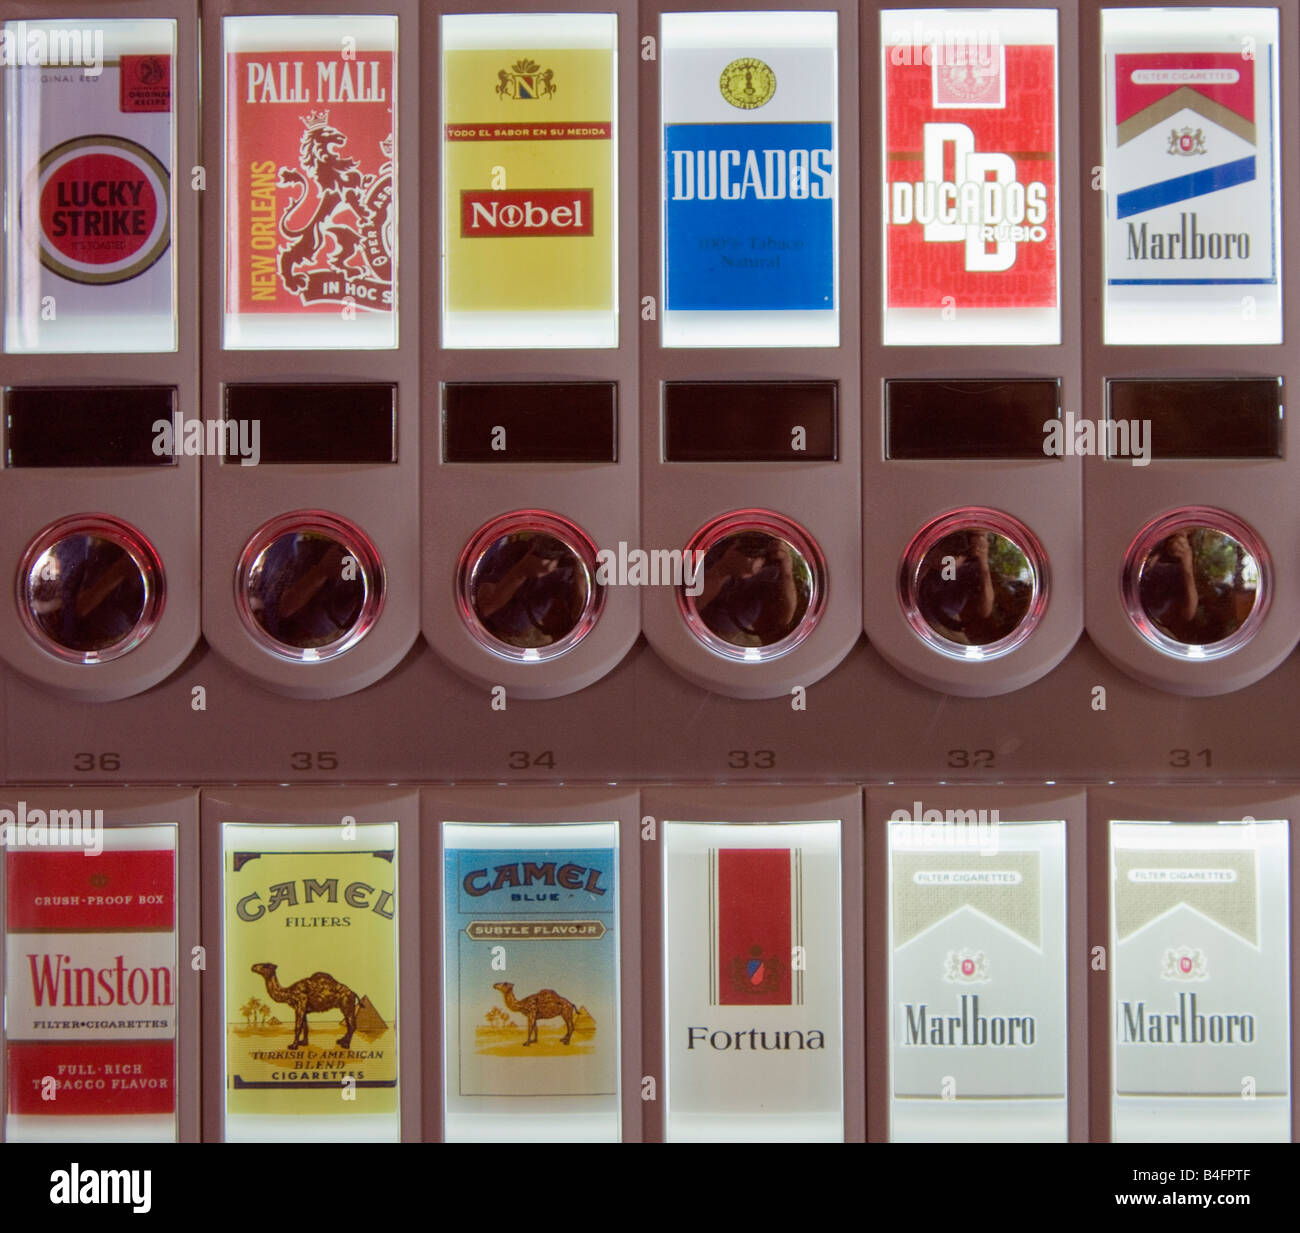 Cigarette vending machine offering many brands Stock Photo